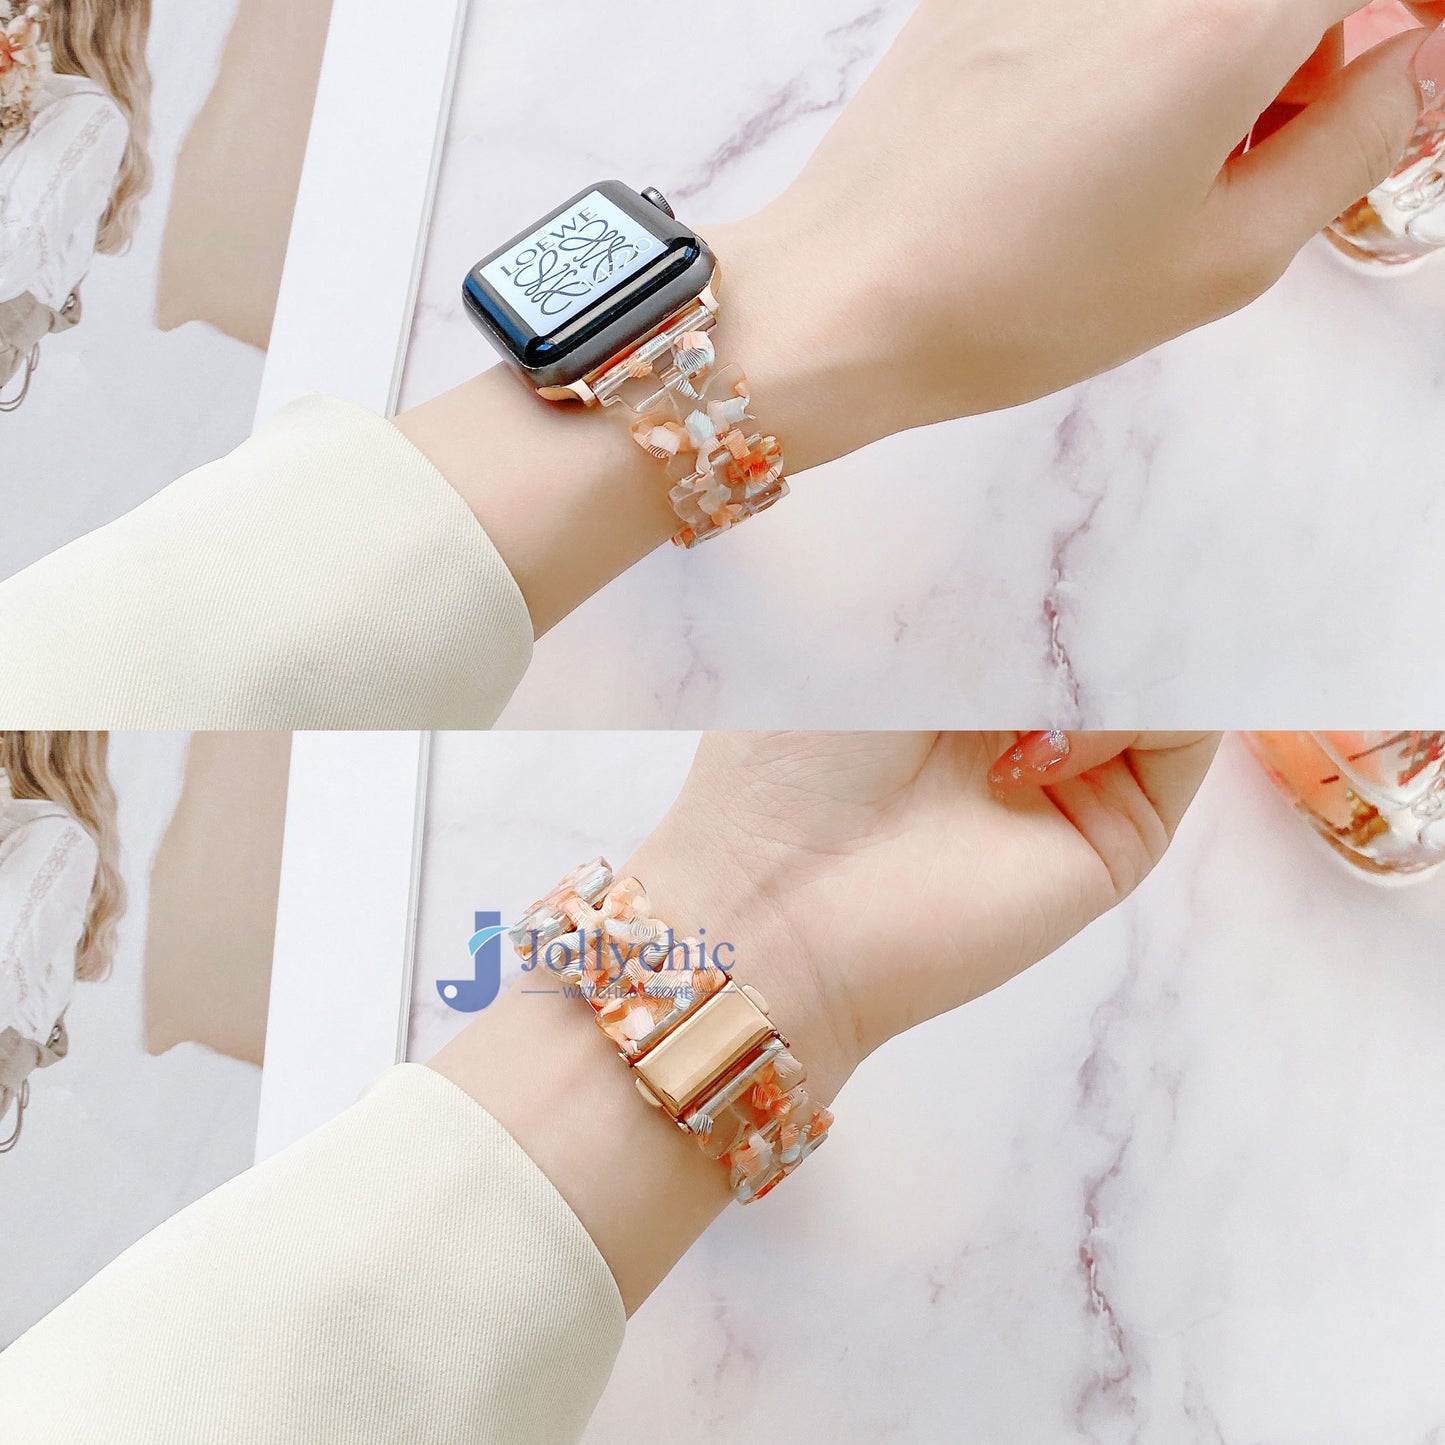 Resin Apple Watch Strap